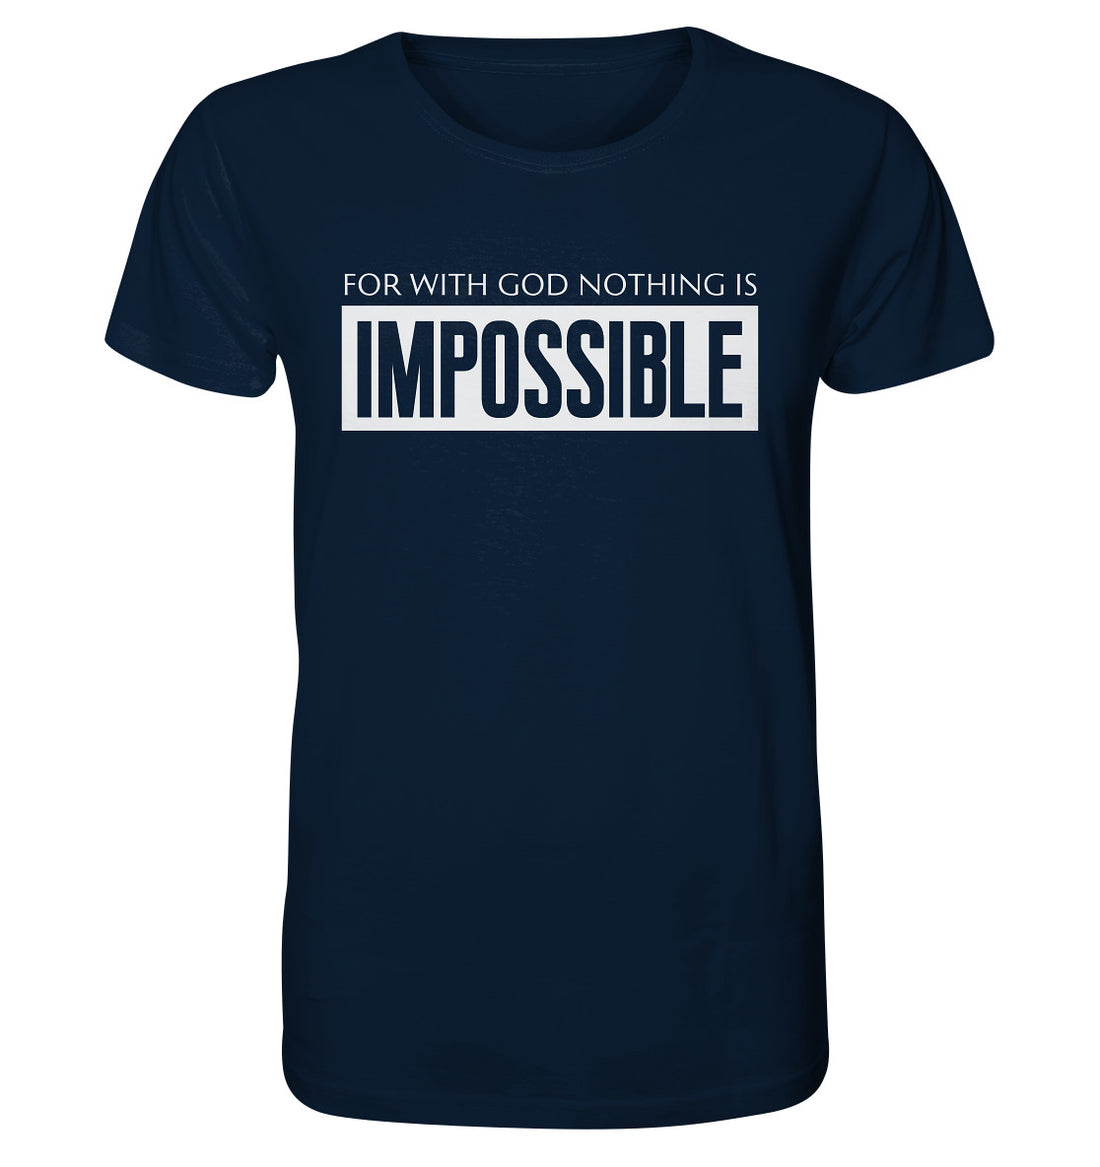 Lk 1,37 - IMPOSSIBLE - Organic Shirt